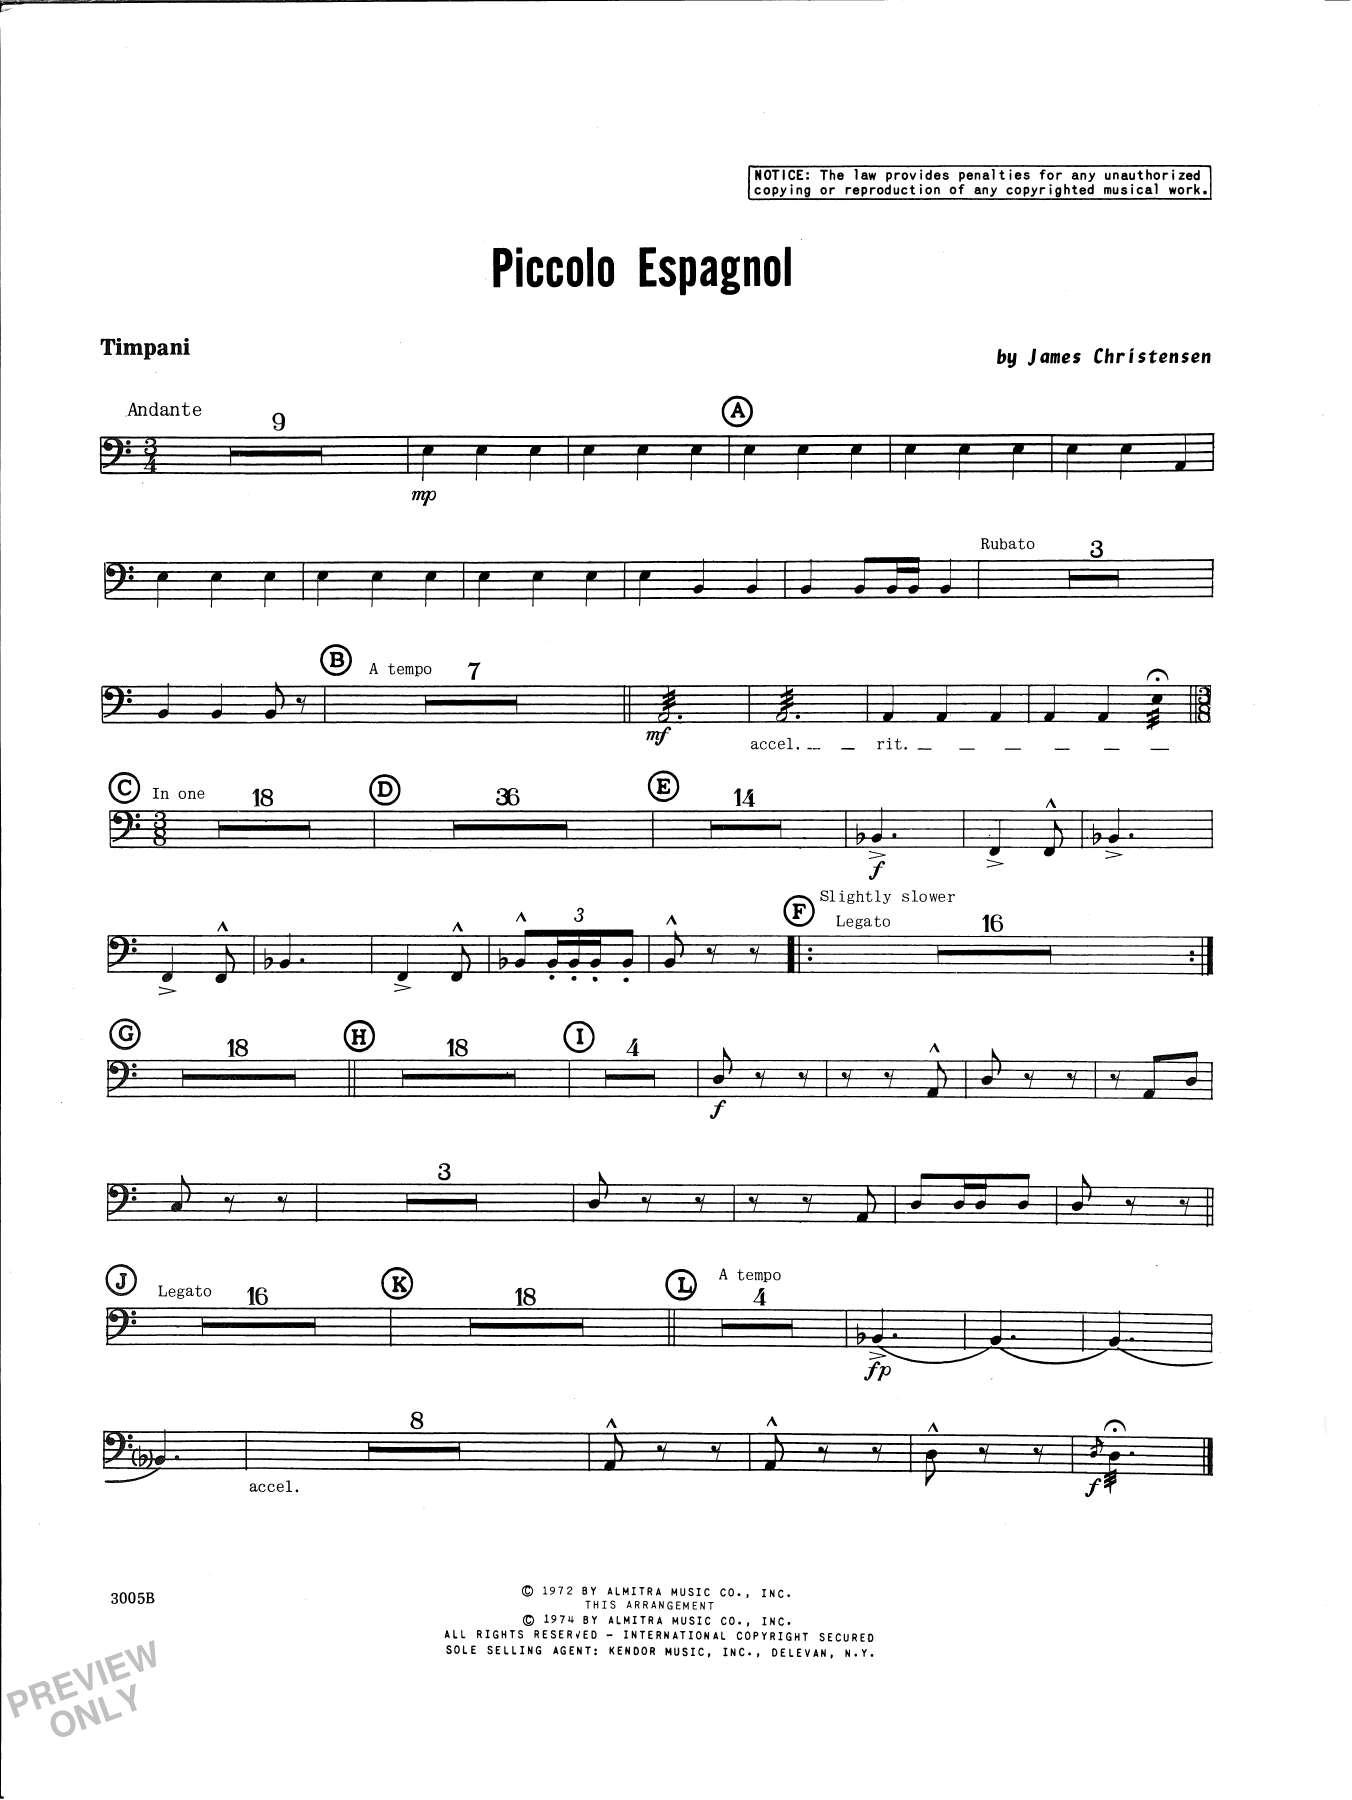 Download James Christensen Piccolo Espagnol - Timpani Sheet Music